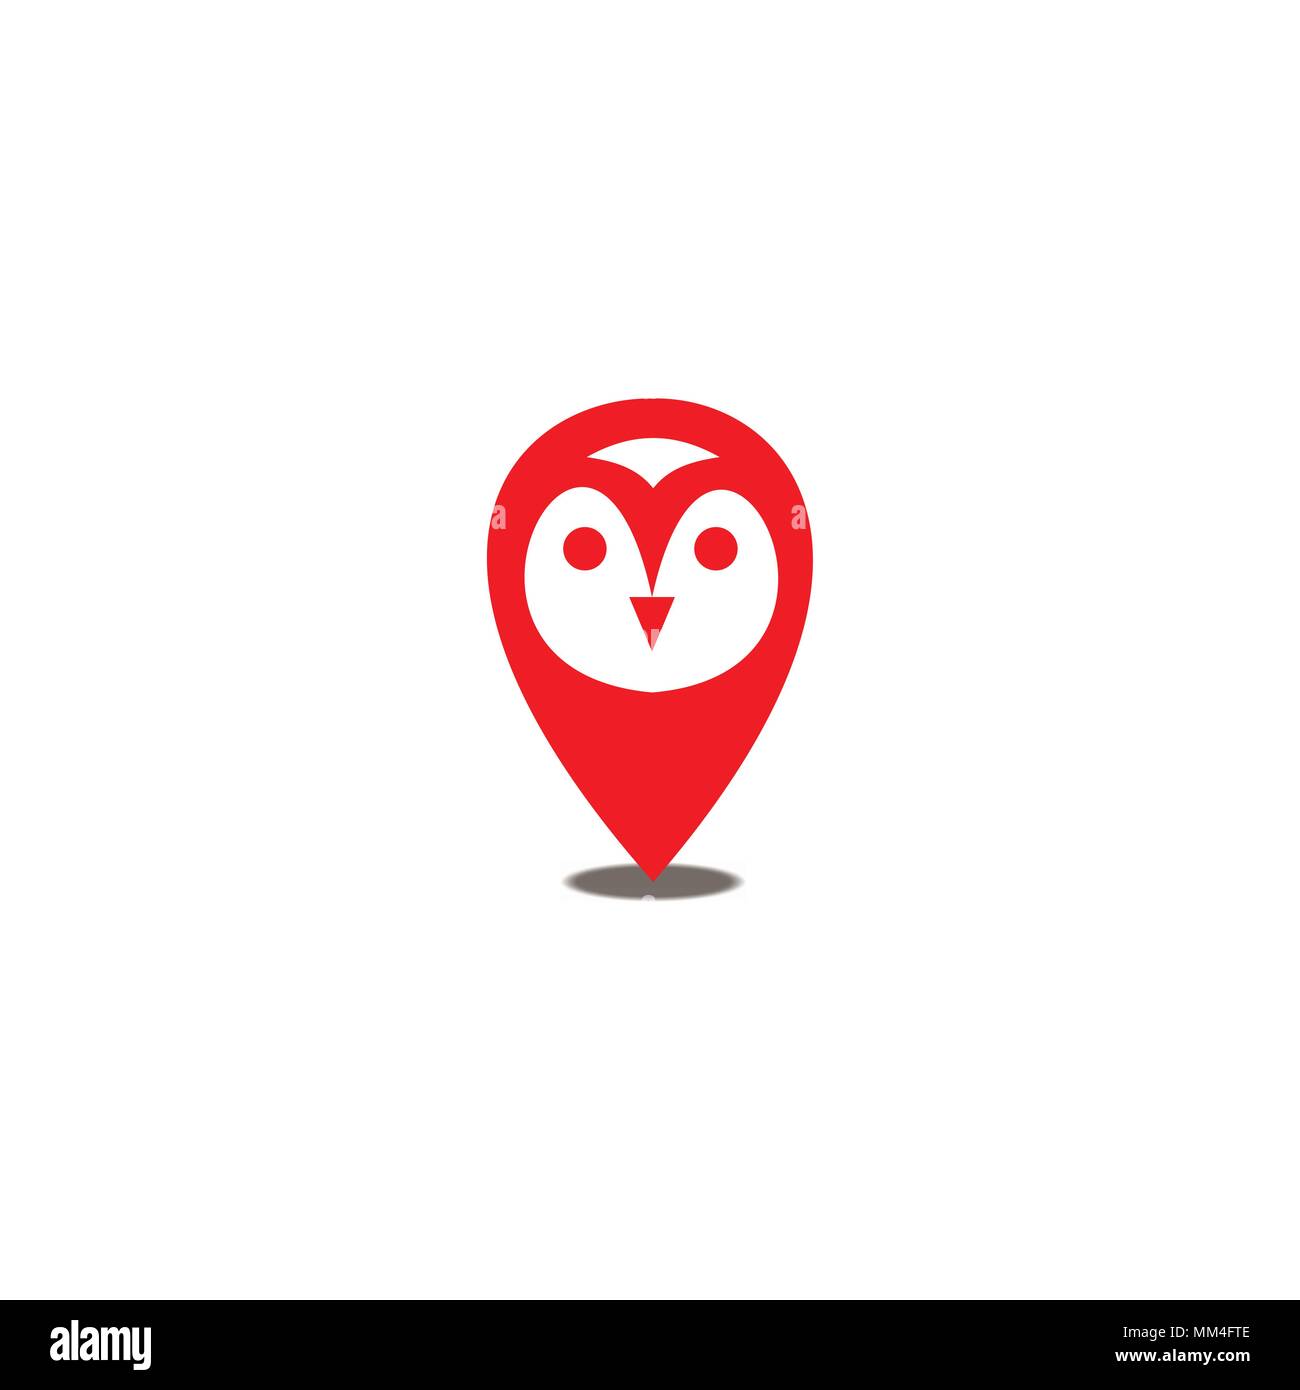 Owl bird logo design, logo, icônes vectorielles. Illustration de Vecteur